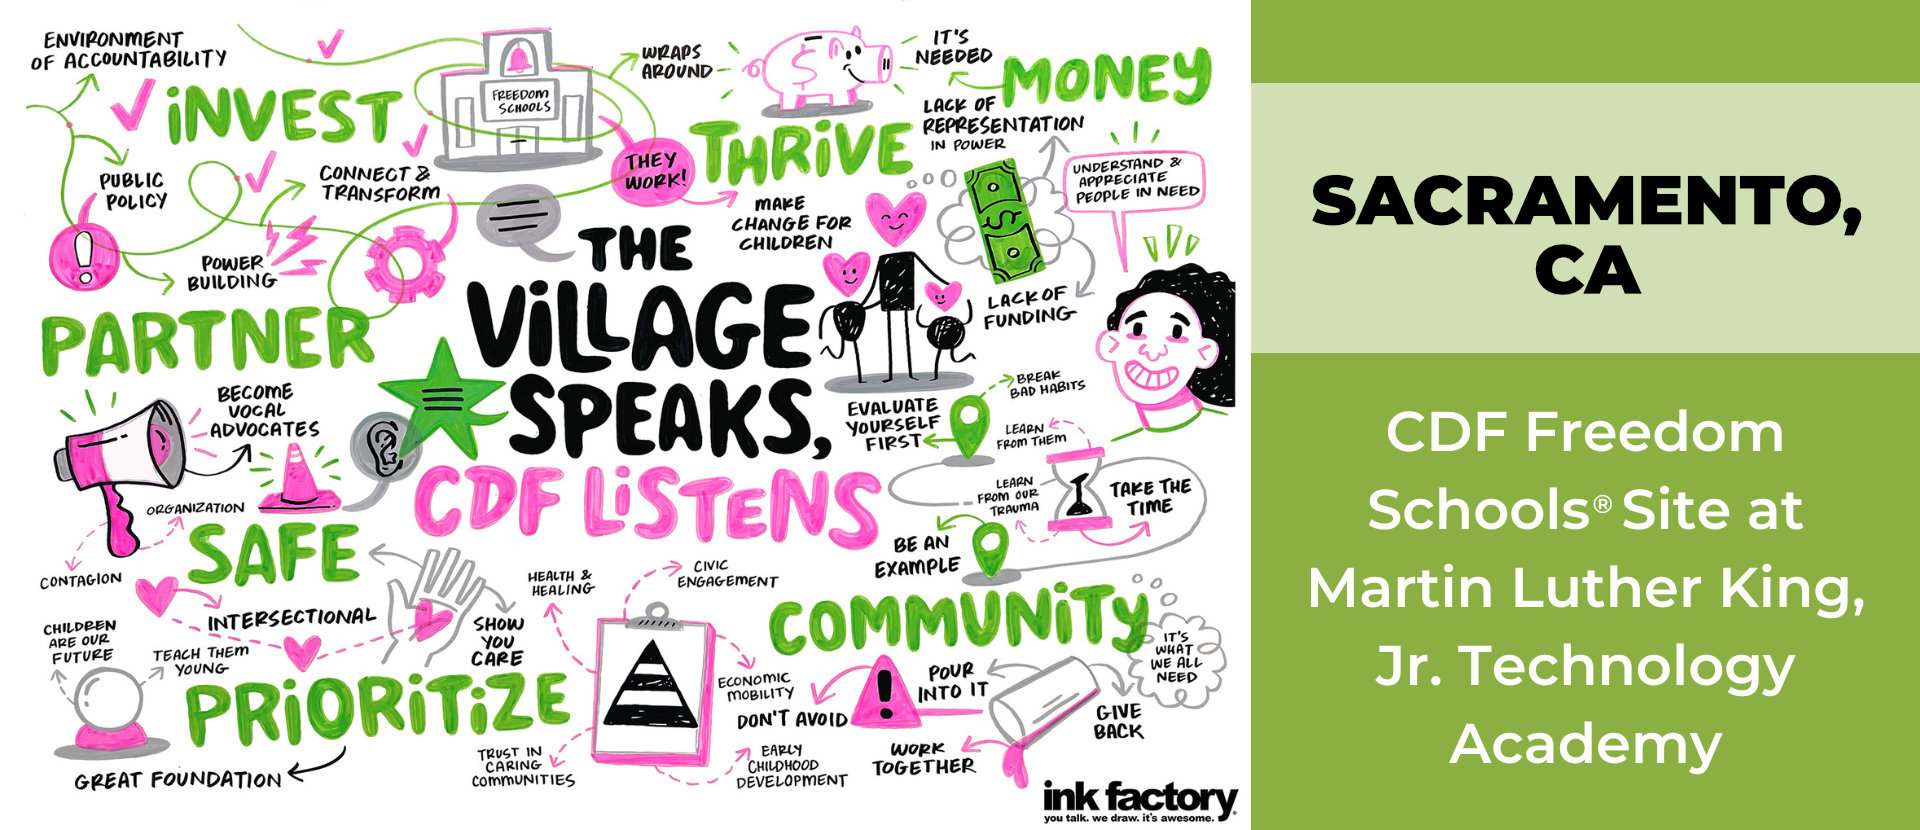 The village speaks, CDF listens - Sacramento2